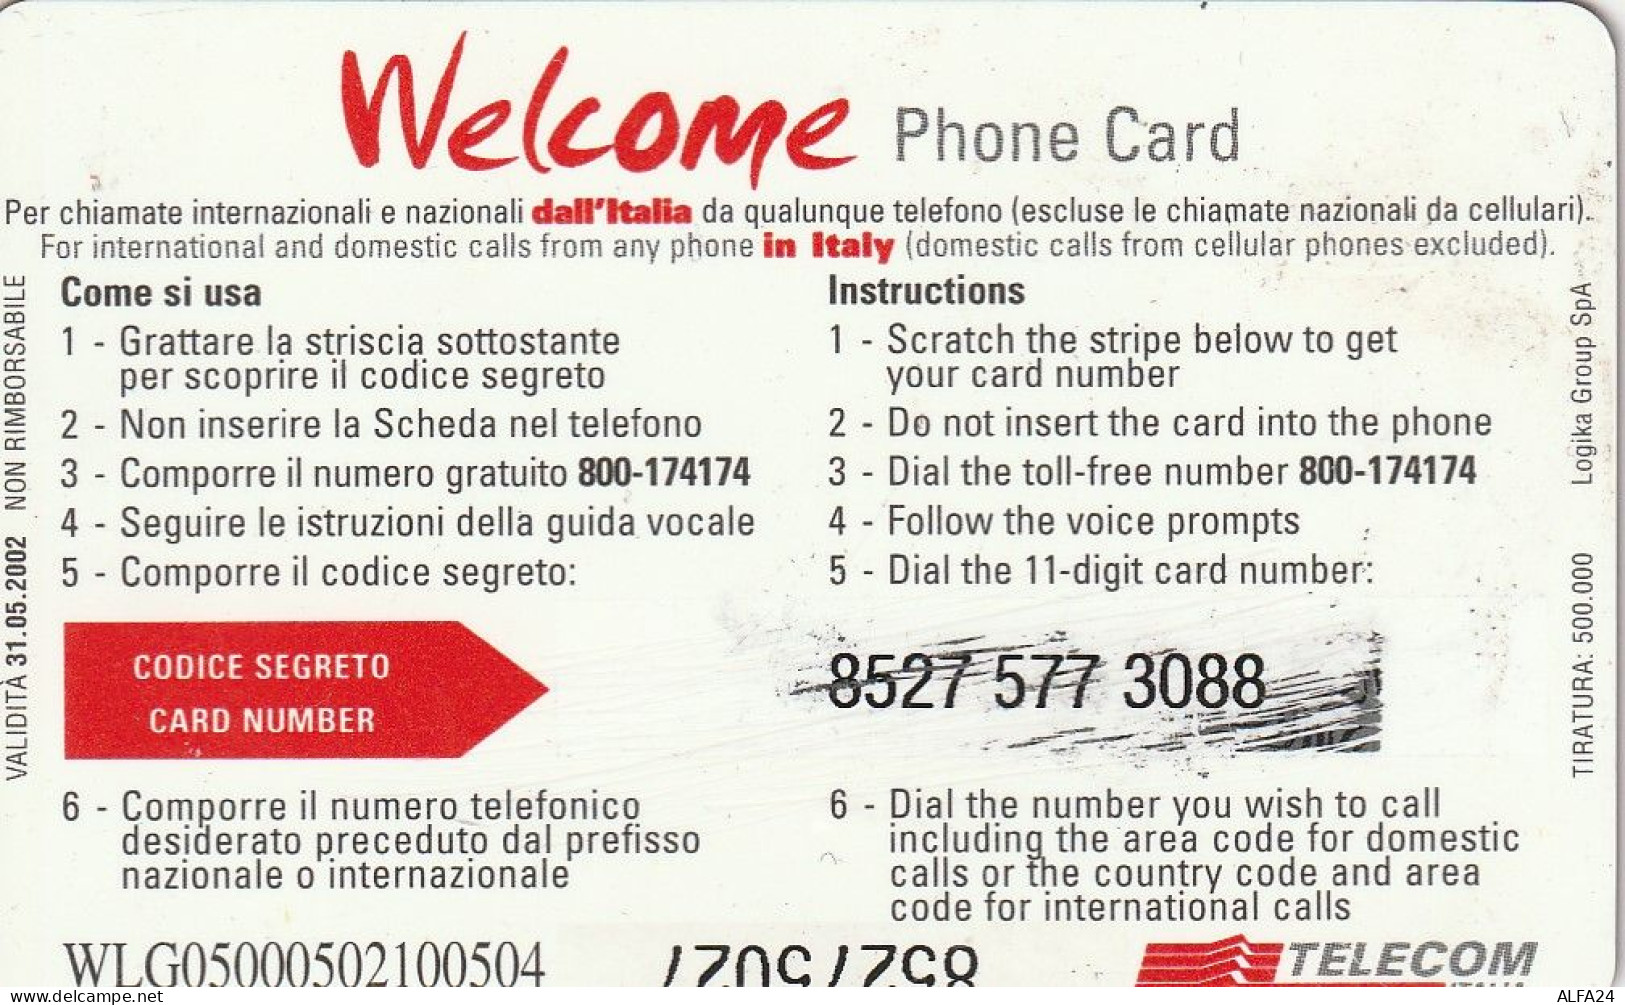 PREPAID PHONE CARD ITALIA WELCOME WLG (CZ2088 - Public Ordinary